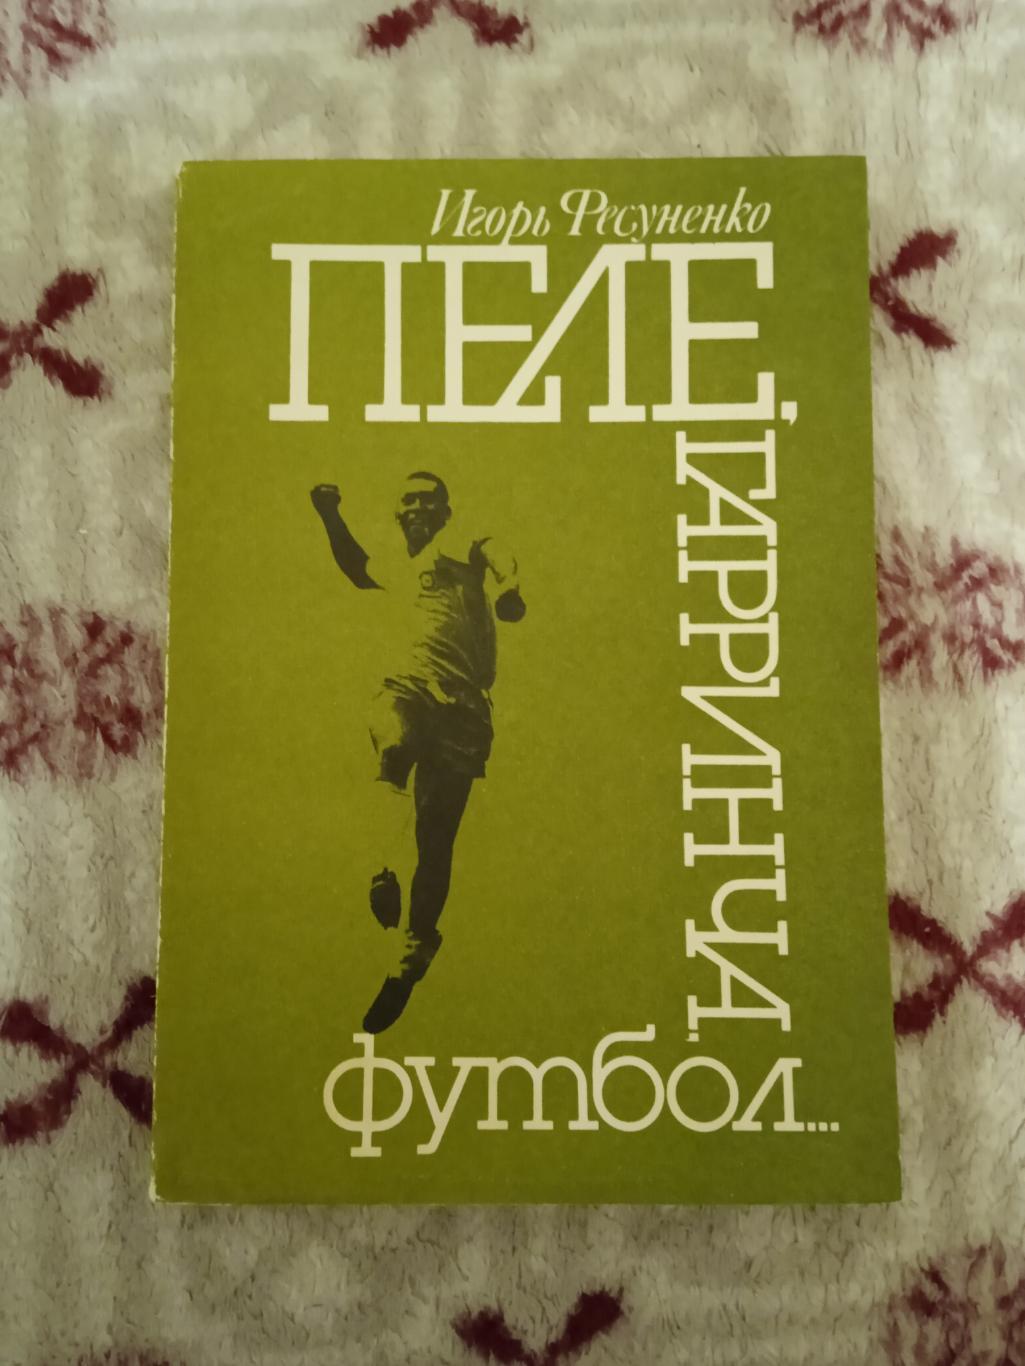 И.Фесуненко.Пеле,Гарринча,футбол.3-е изд.Москва 1990 г.